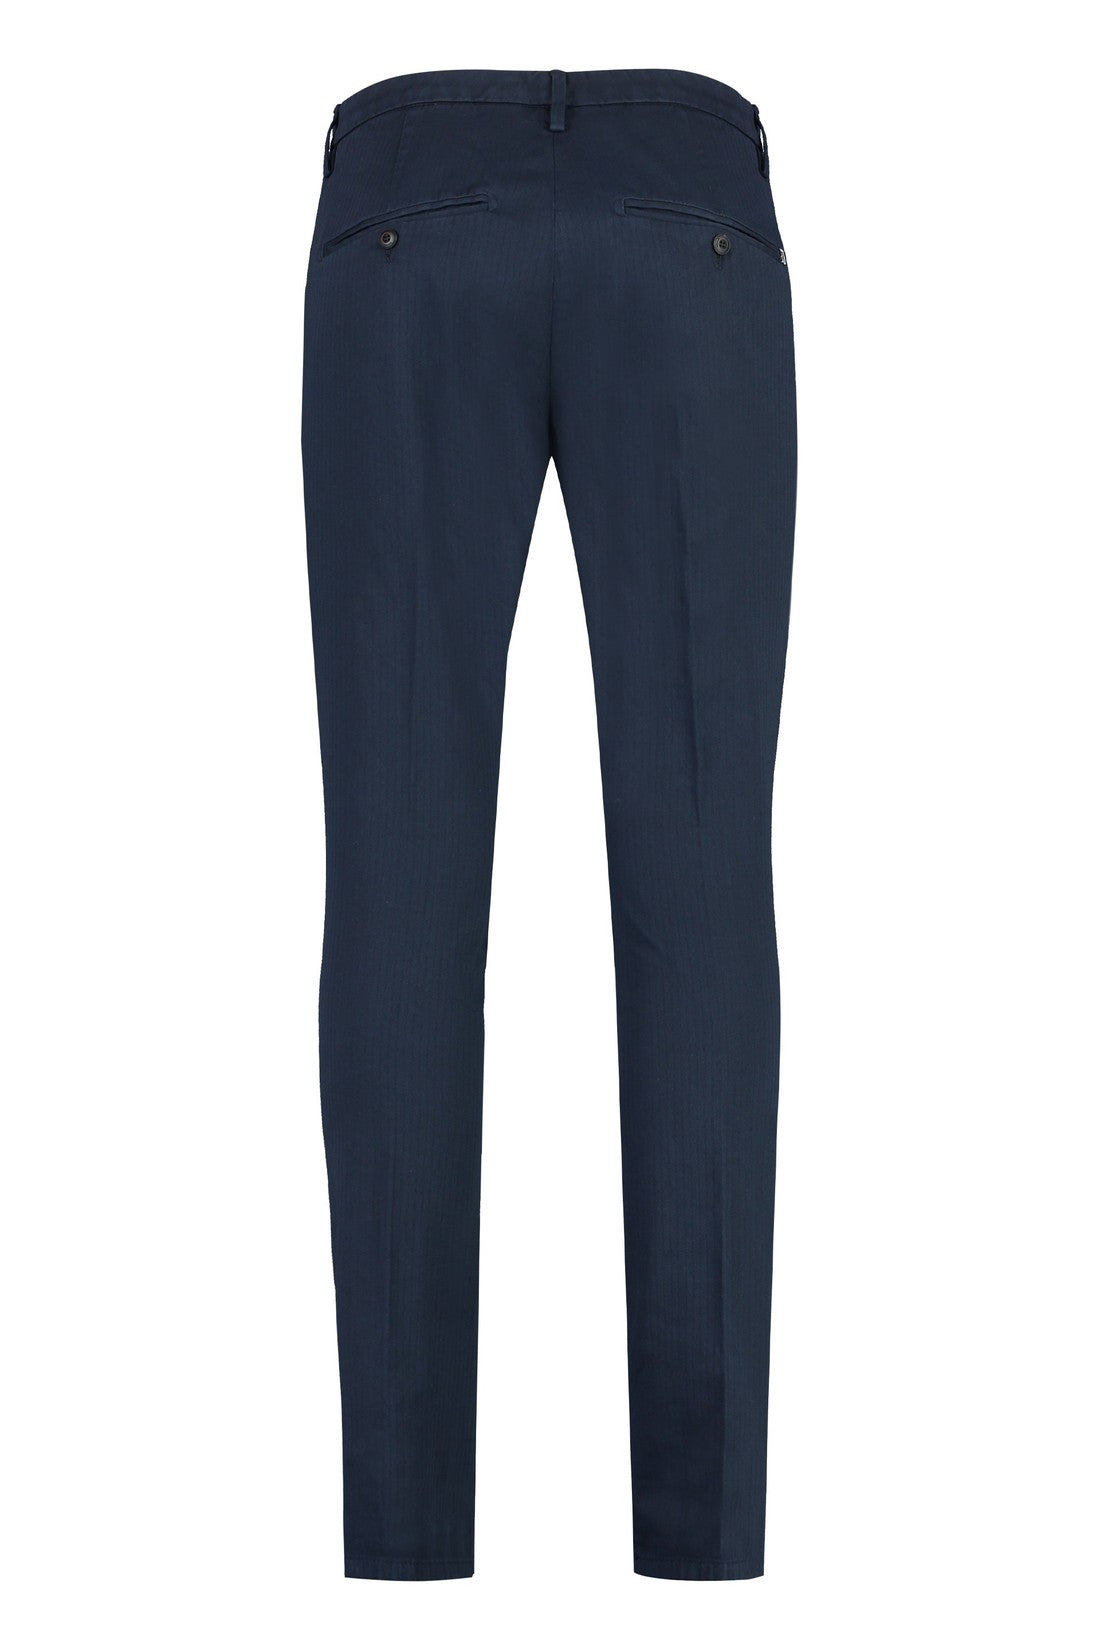 Dondup-OUTLET-SALE-Gaubert Cotton Chino trousers-ARCHIVIST